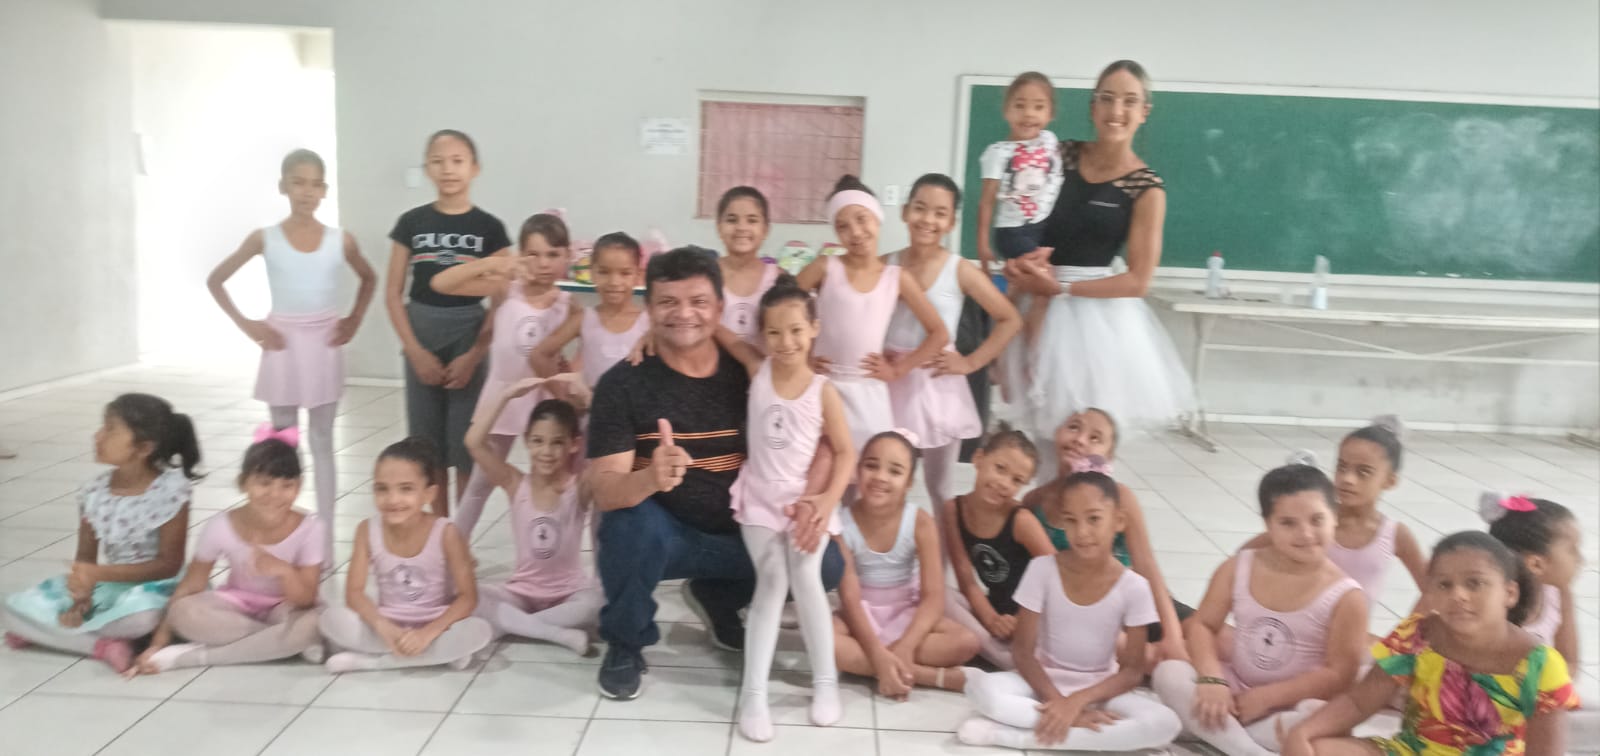 Prefeitura de Monsenhor Gil disponibiliza aulas de balé gratuitas